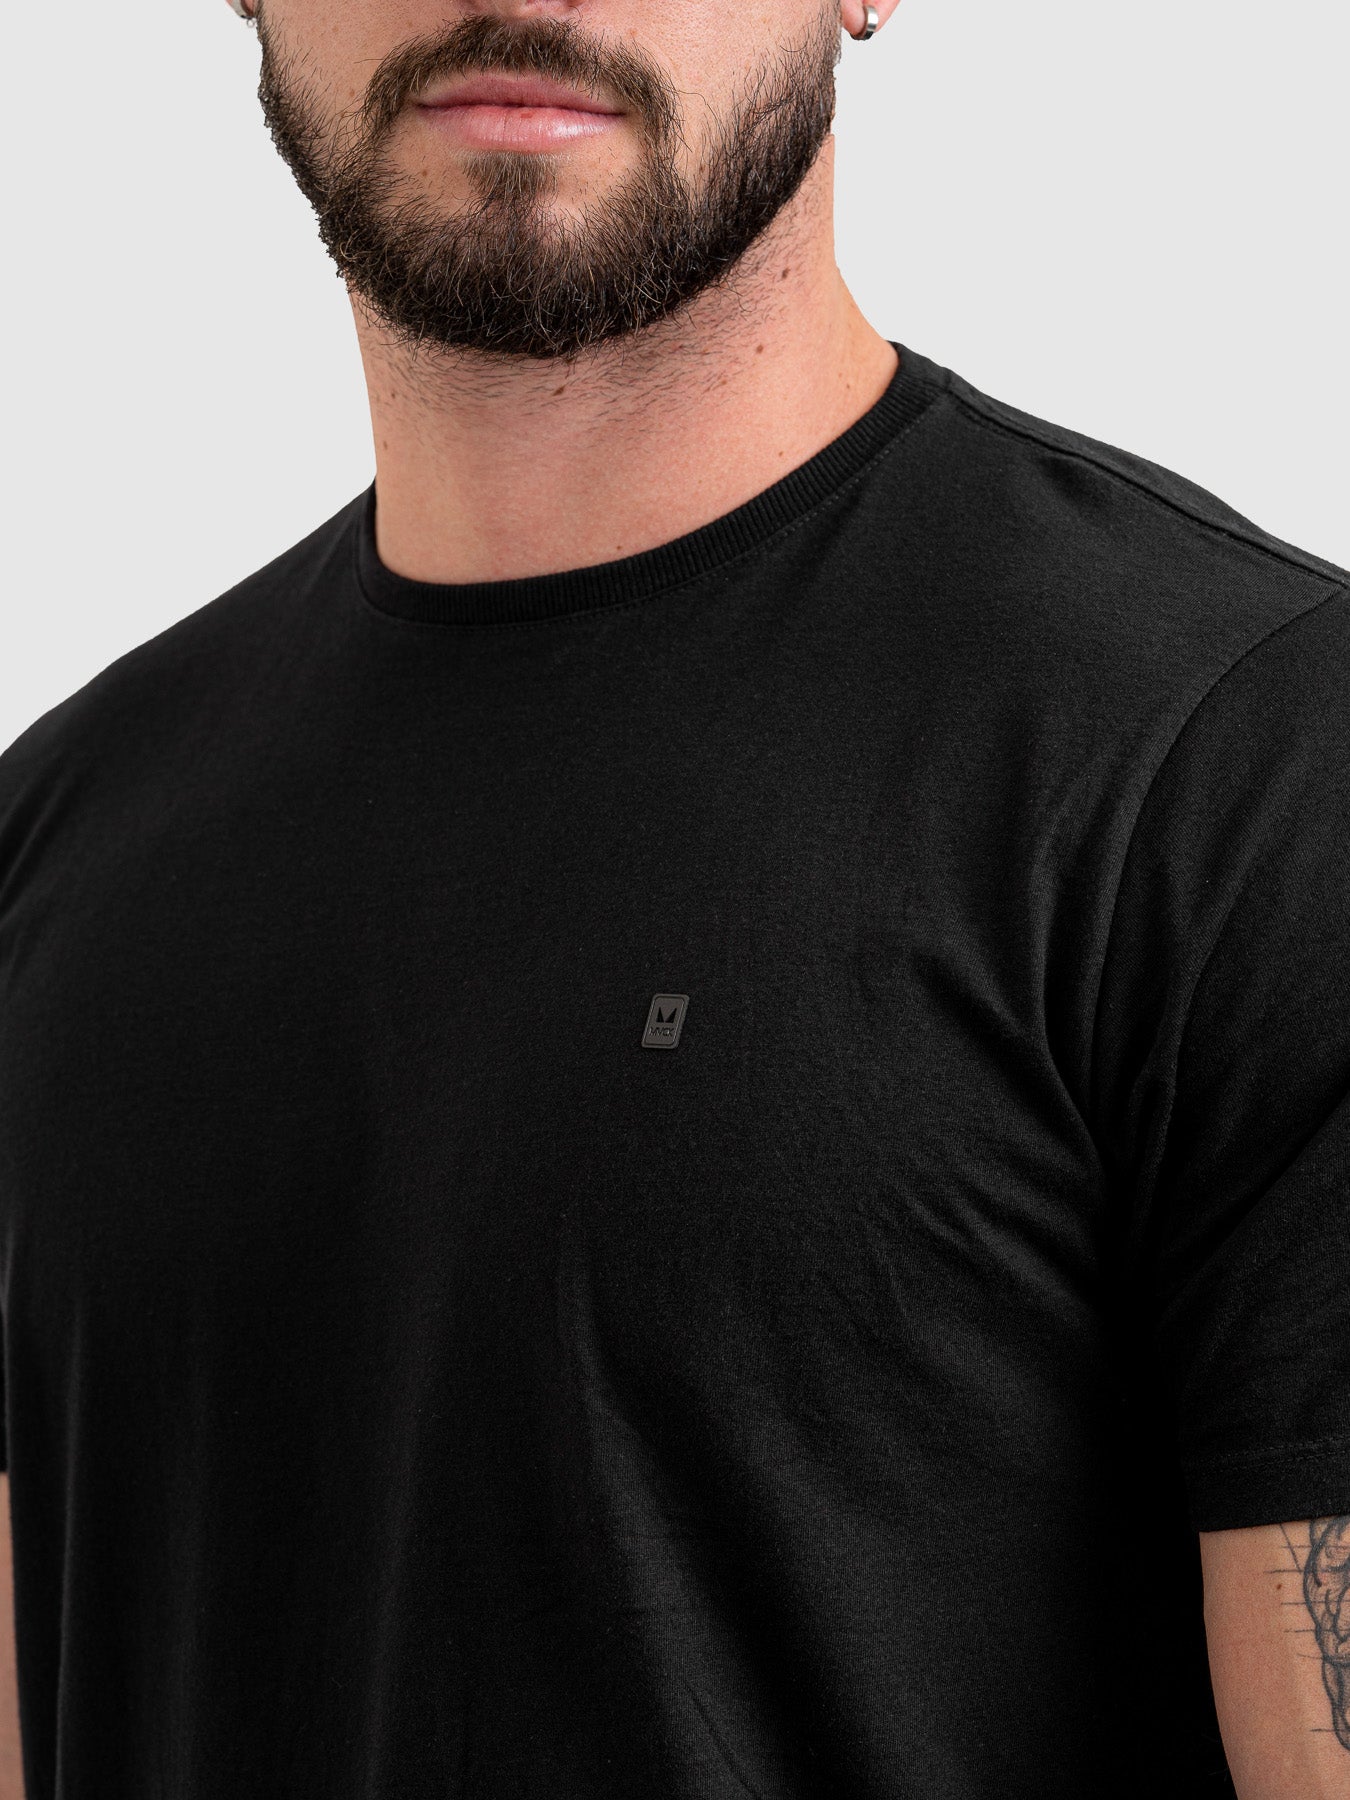 Camiseta Basic All Black MVCK